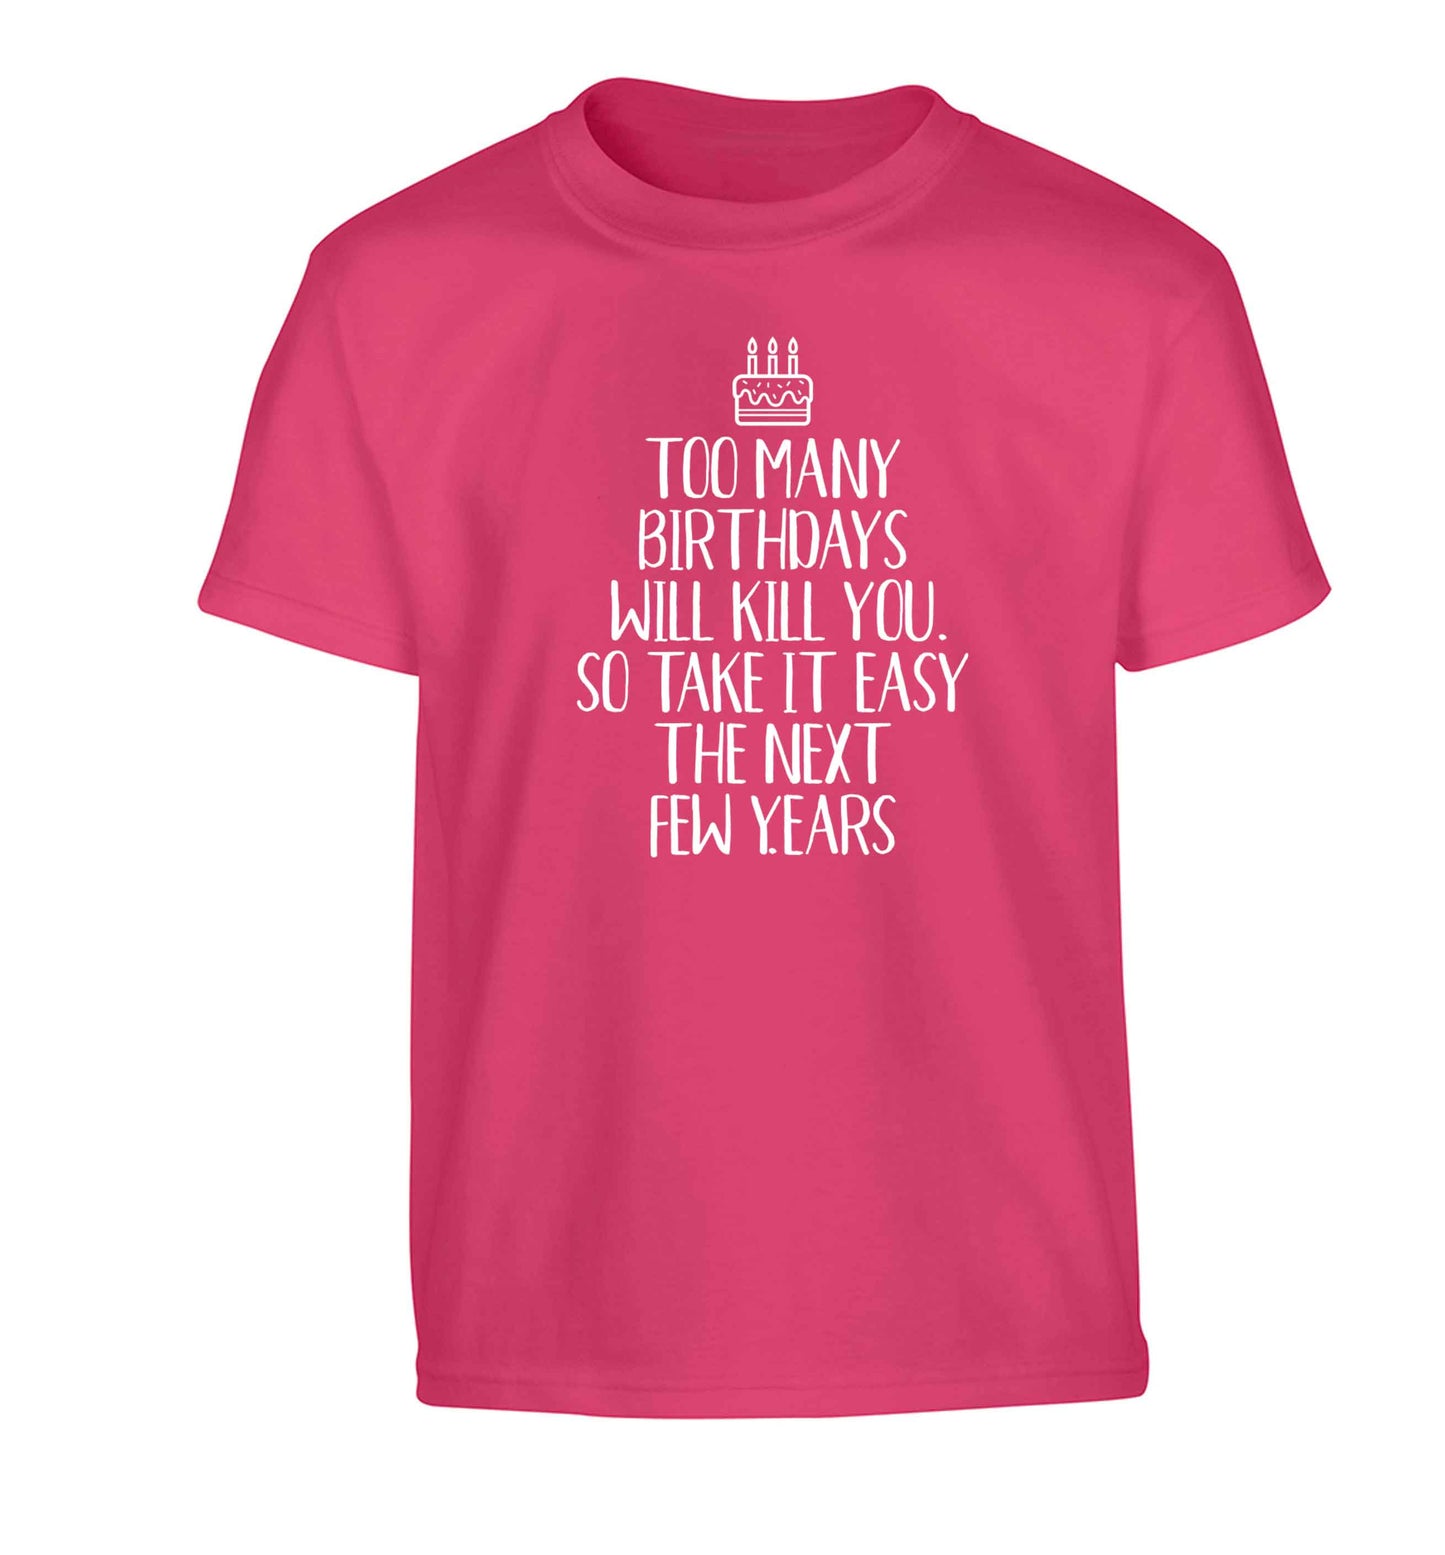 Too many birthdays will kill you so take it easy Children's pink Tshirt 12-13 Years